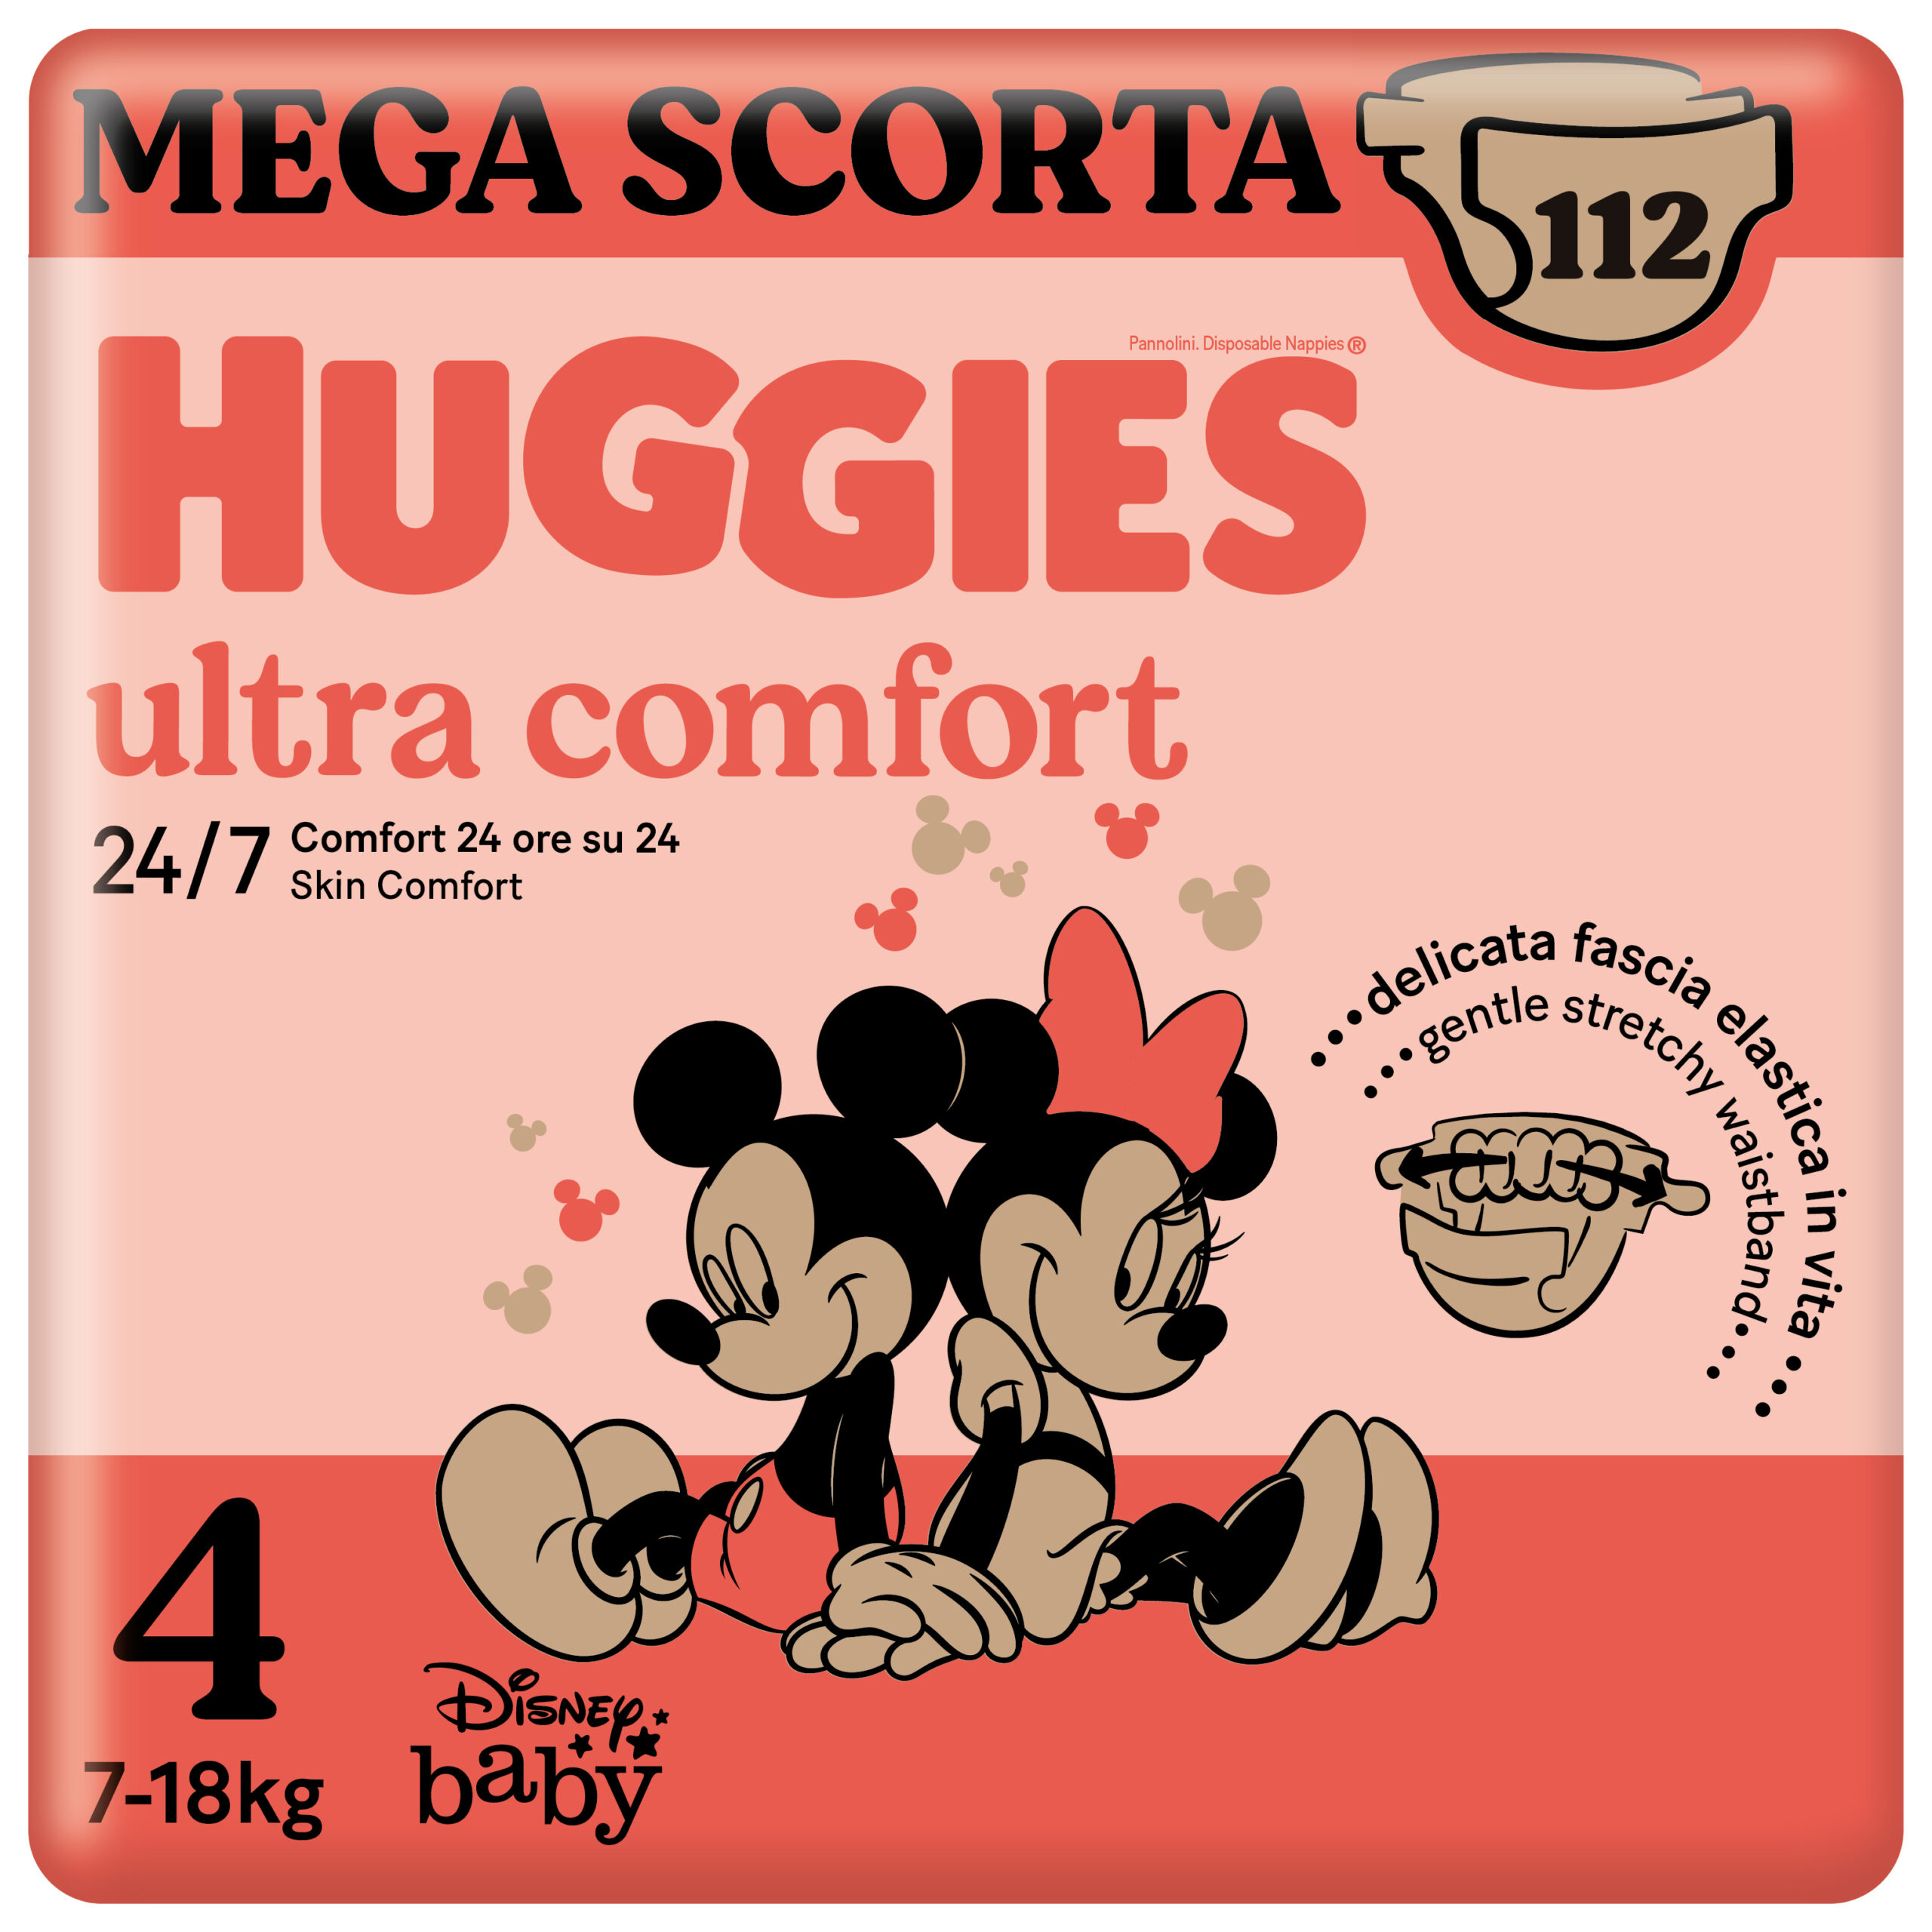 Huggies ultra comfort megapack tg.4 - 112 pezzi - Huggies